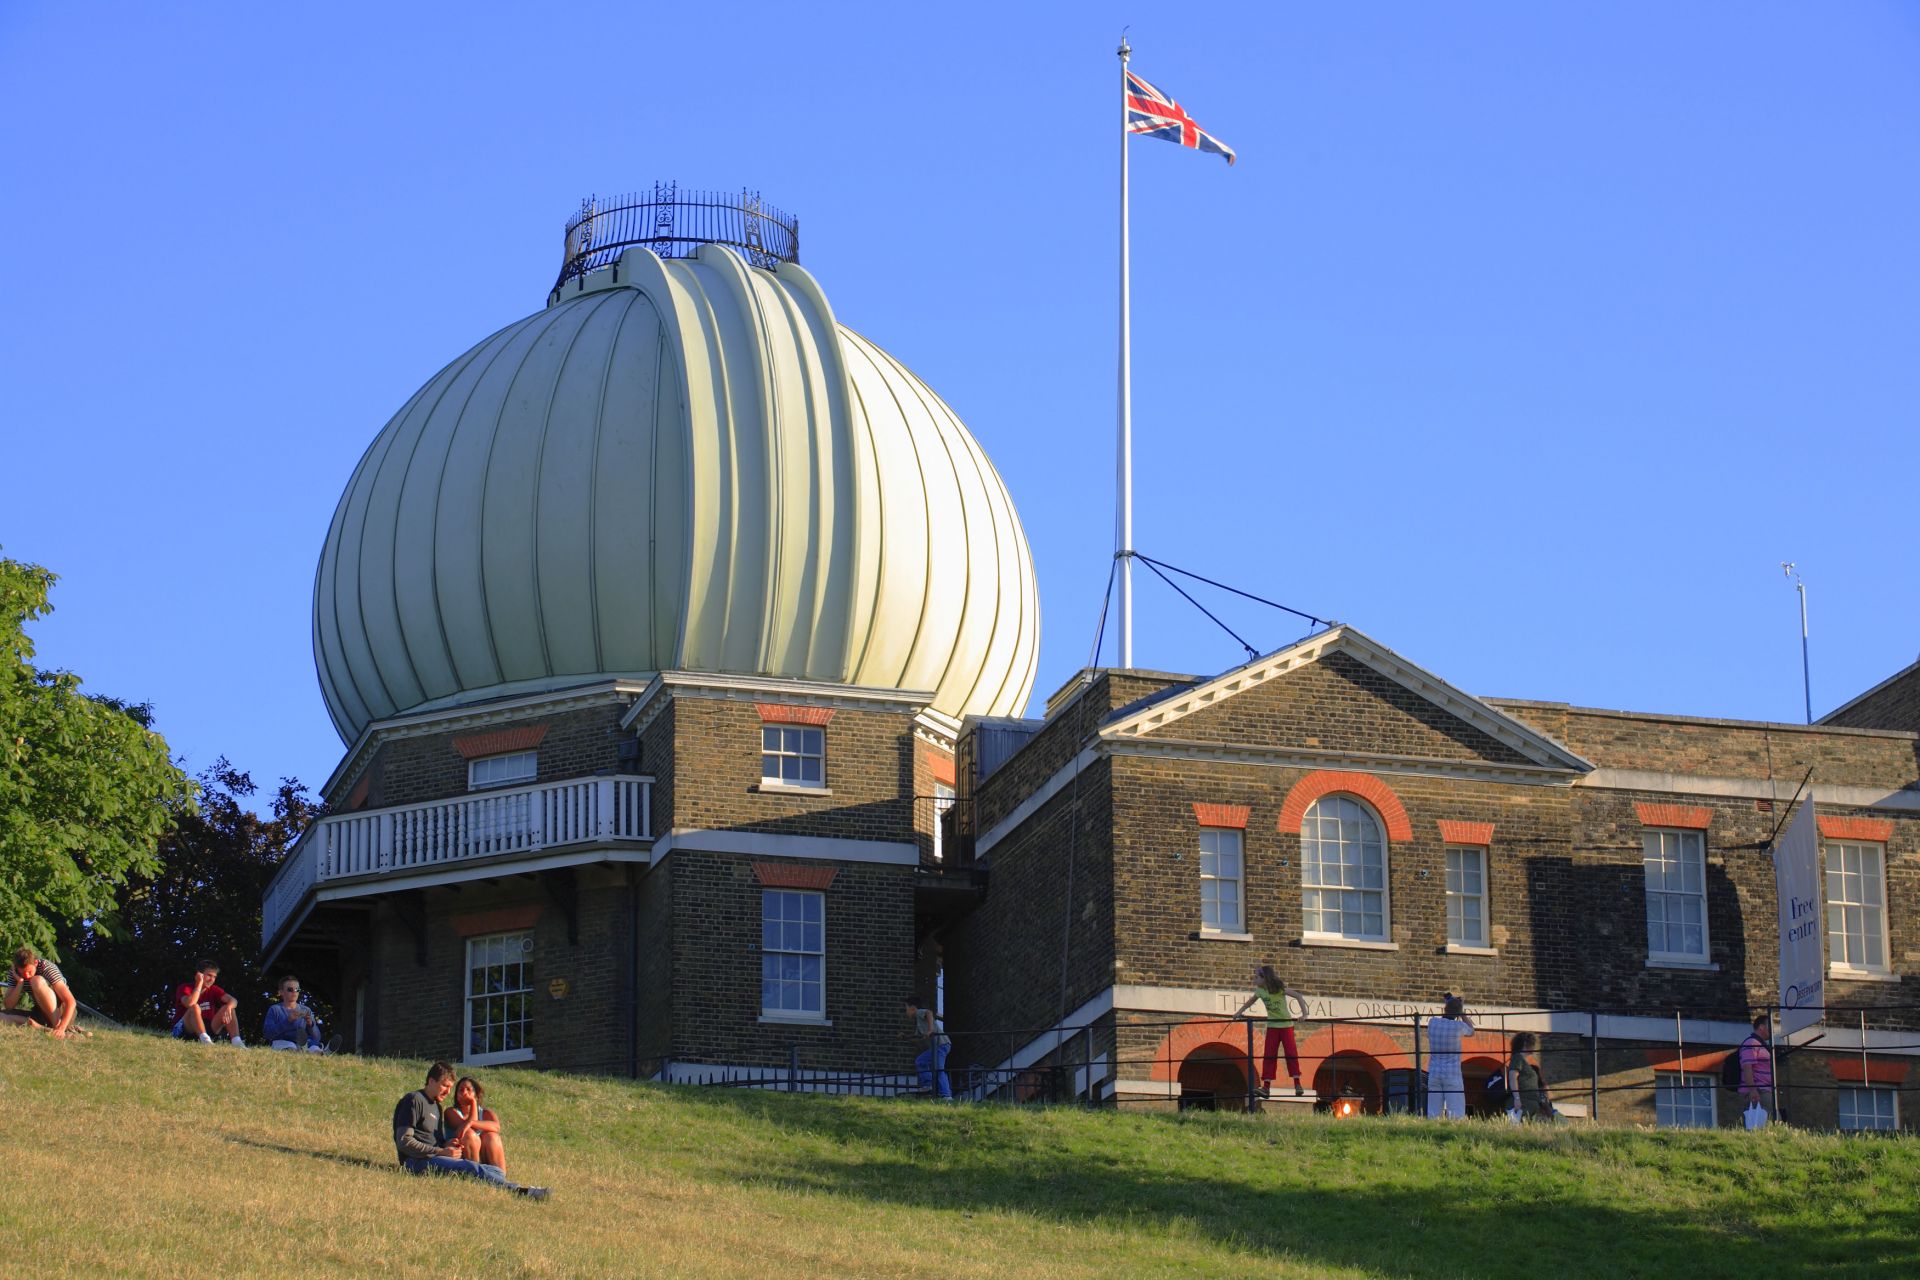 visit greenwich royal observatory